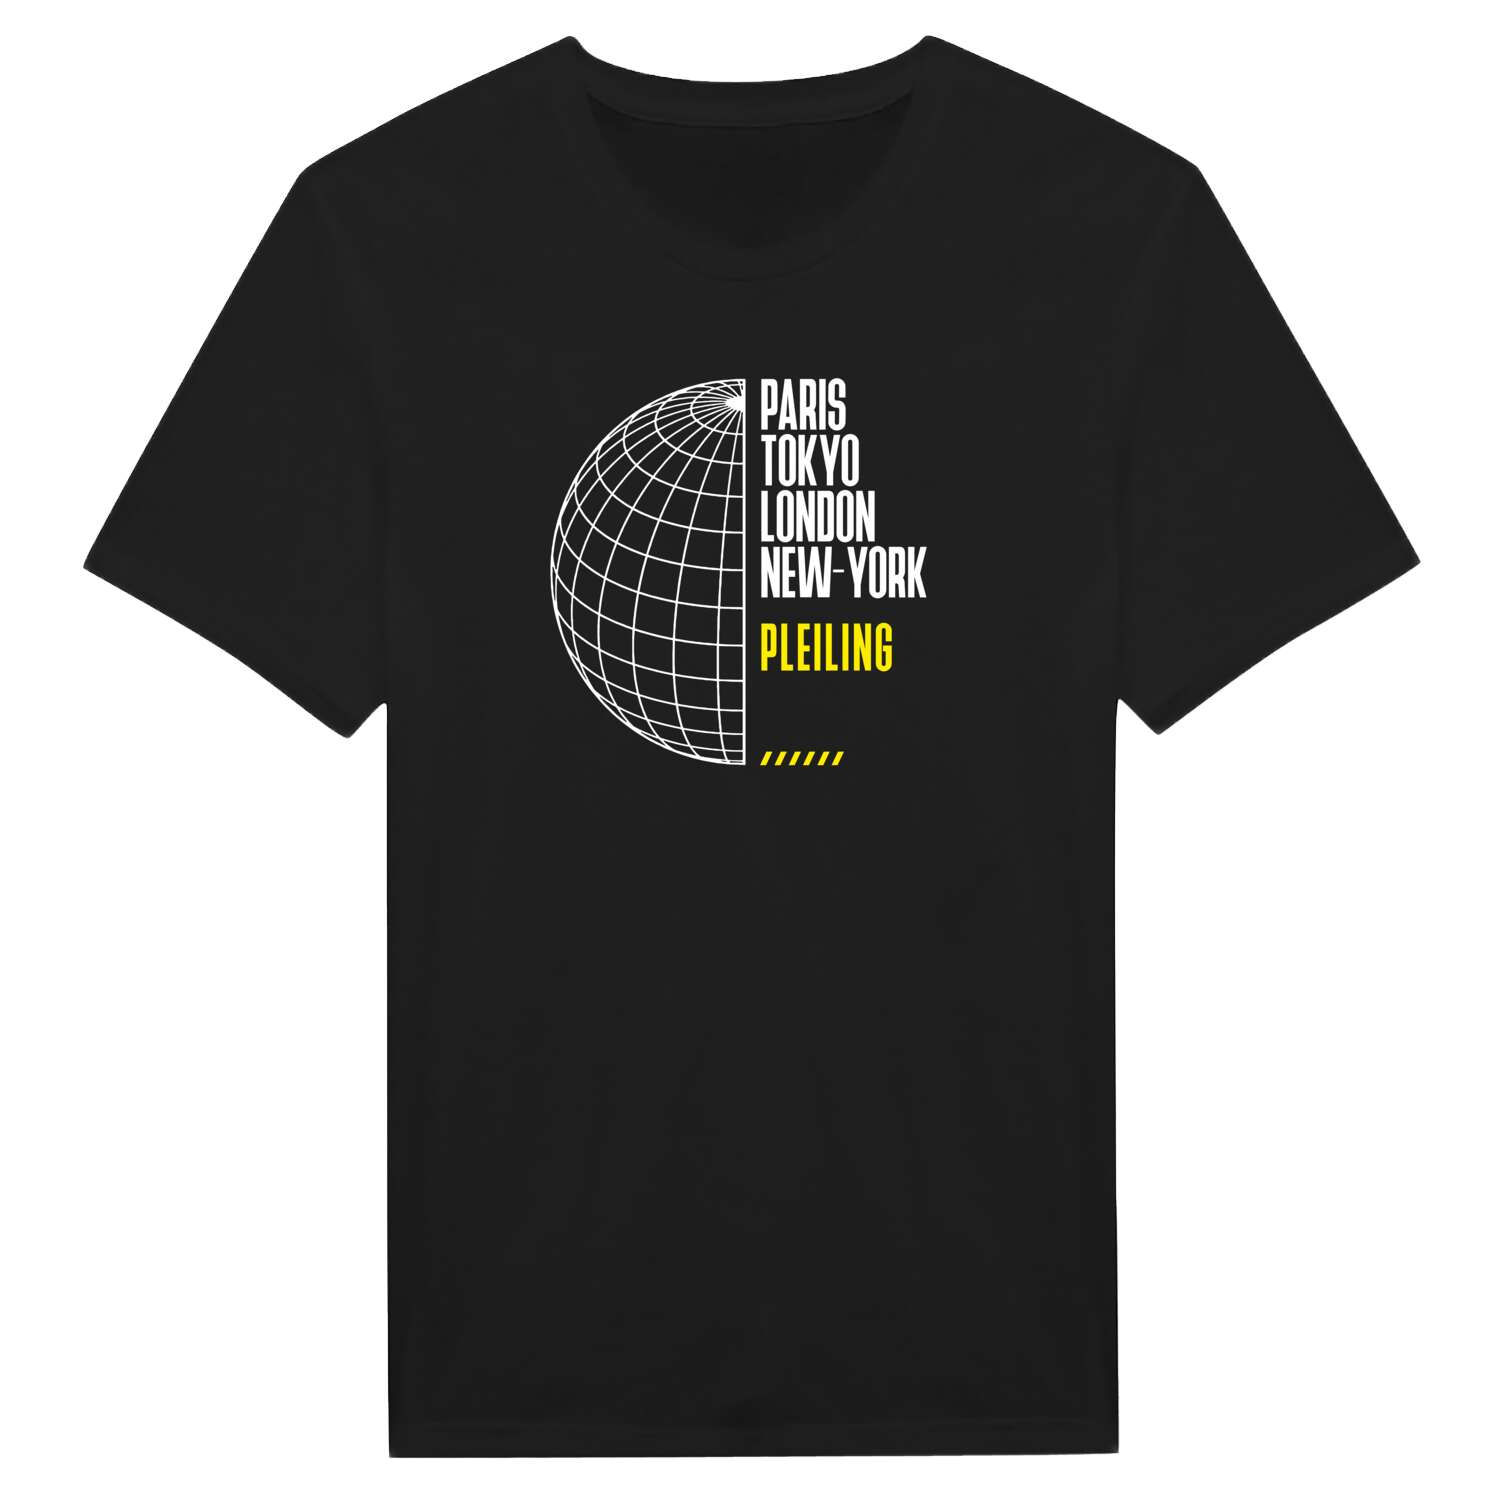 Pleiling T-Shirt »Paris Tokyo London«